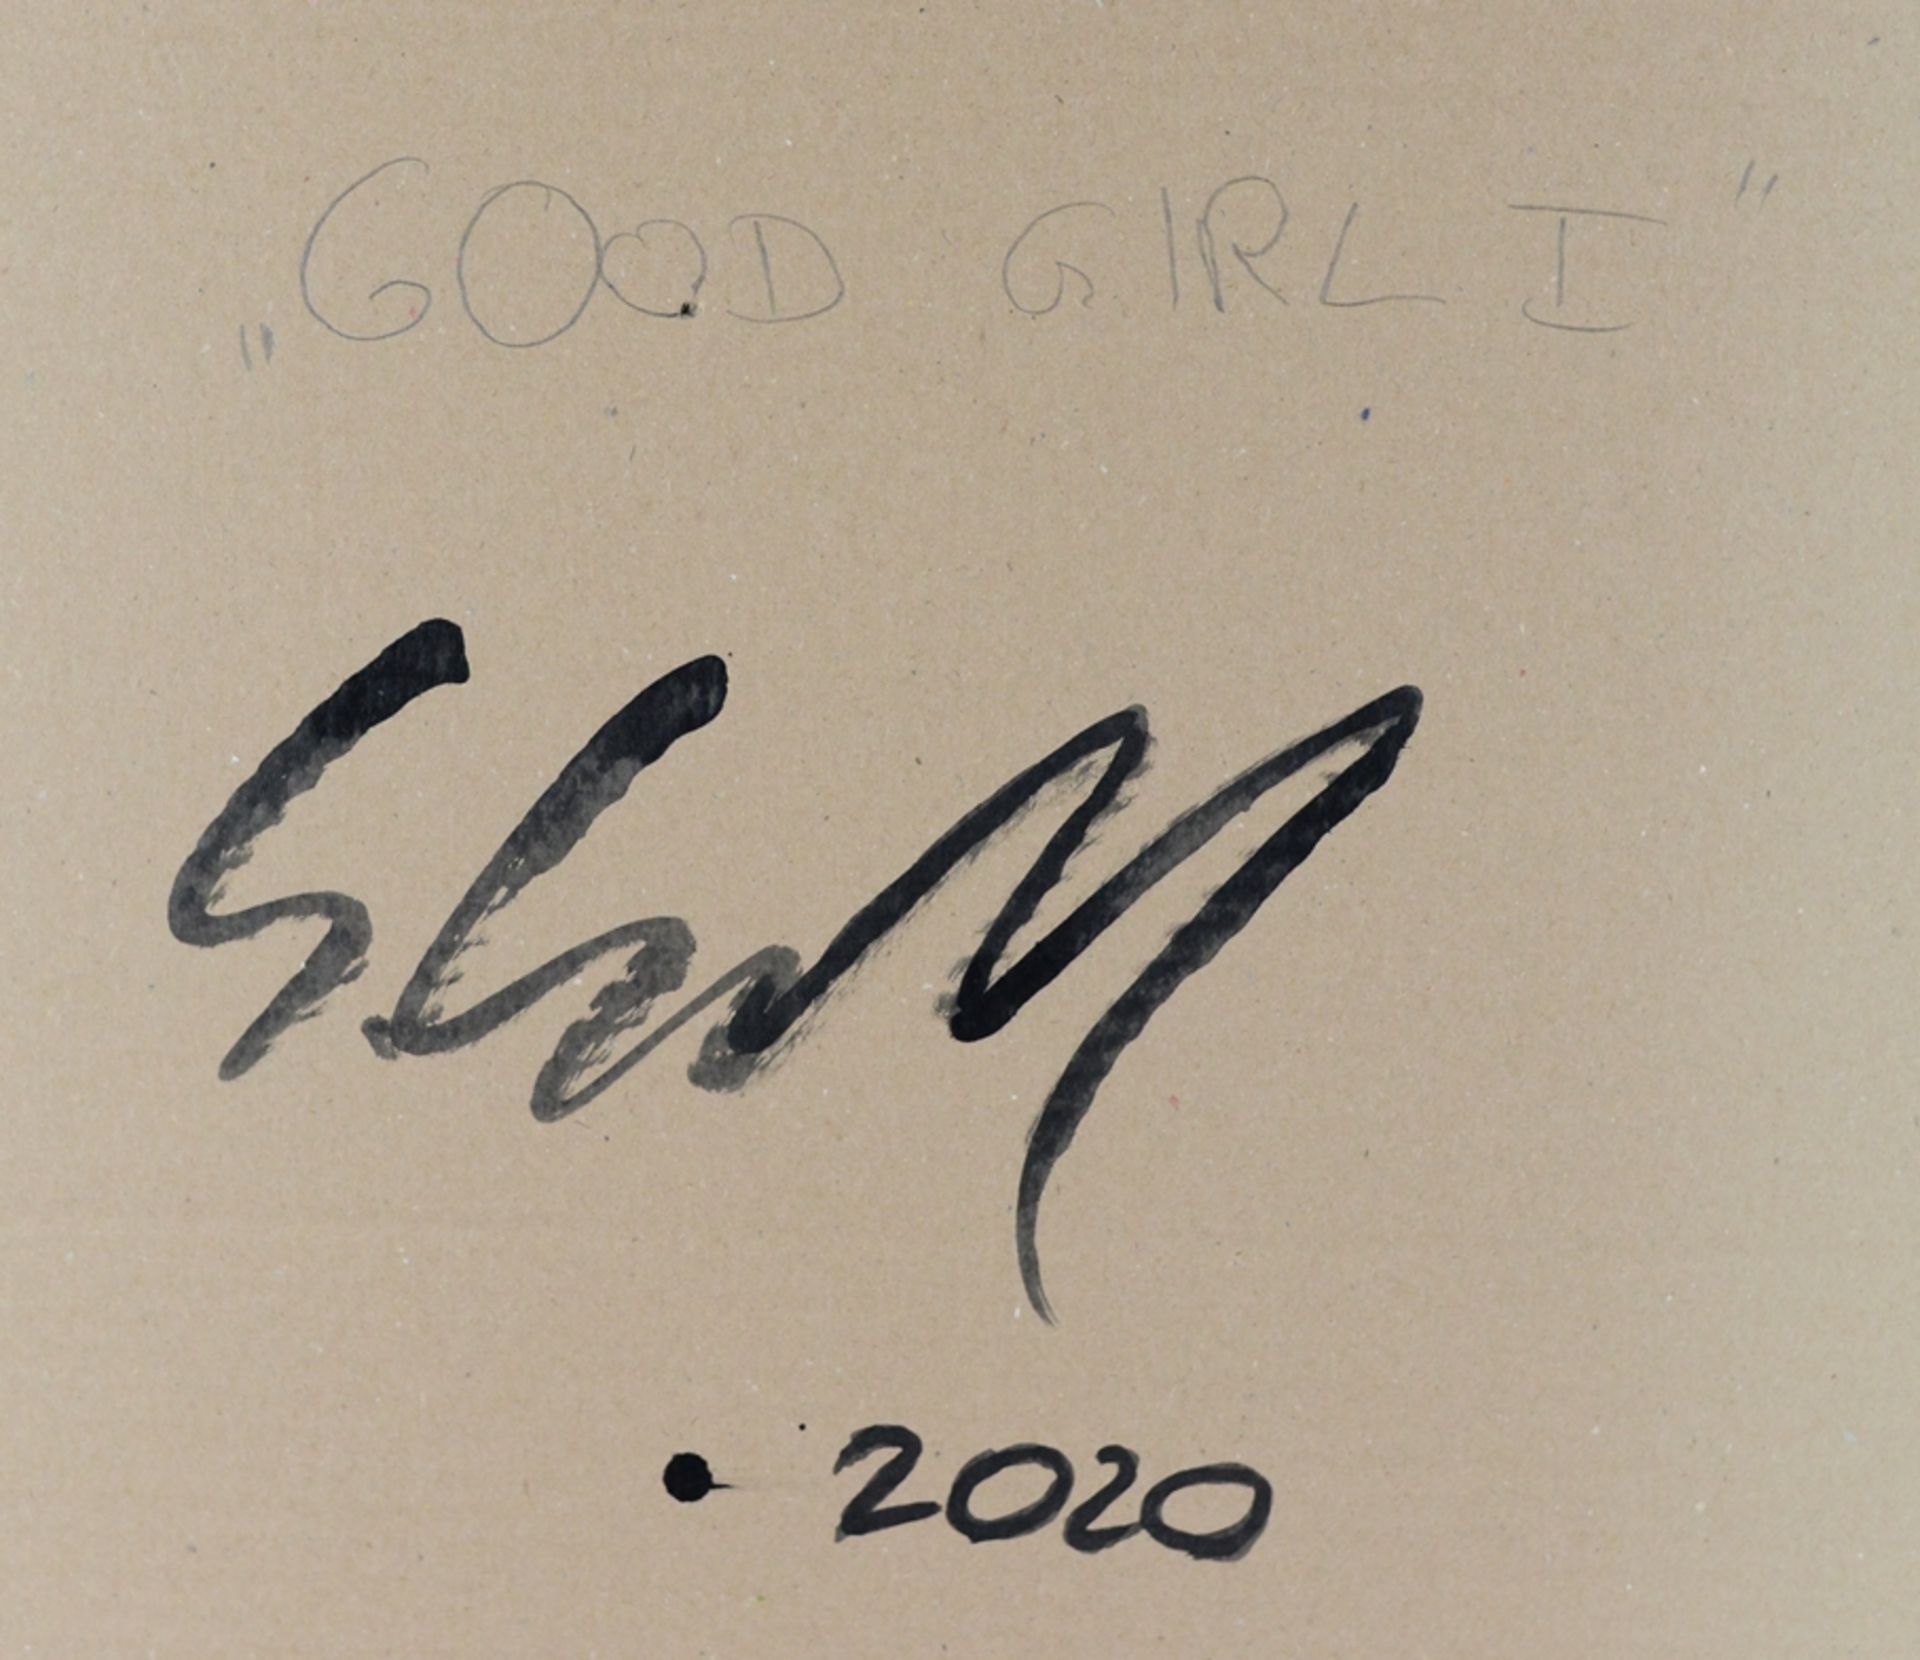 Scheurell, Stefanie (1980 Berlin) "Good Girl", advertising poster for the fragrance Good Girl proce - Image 2 of 3